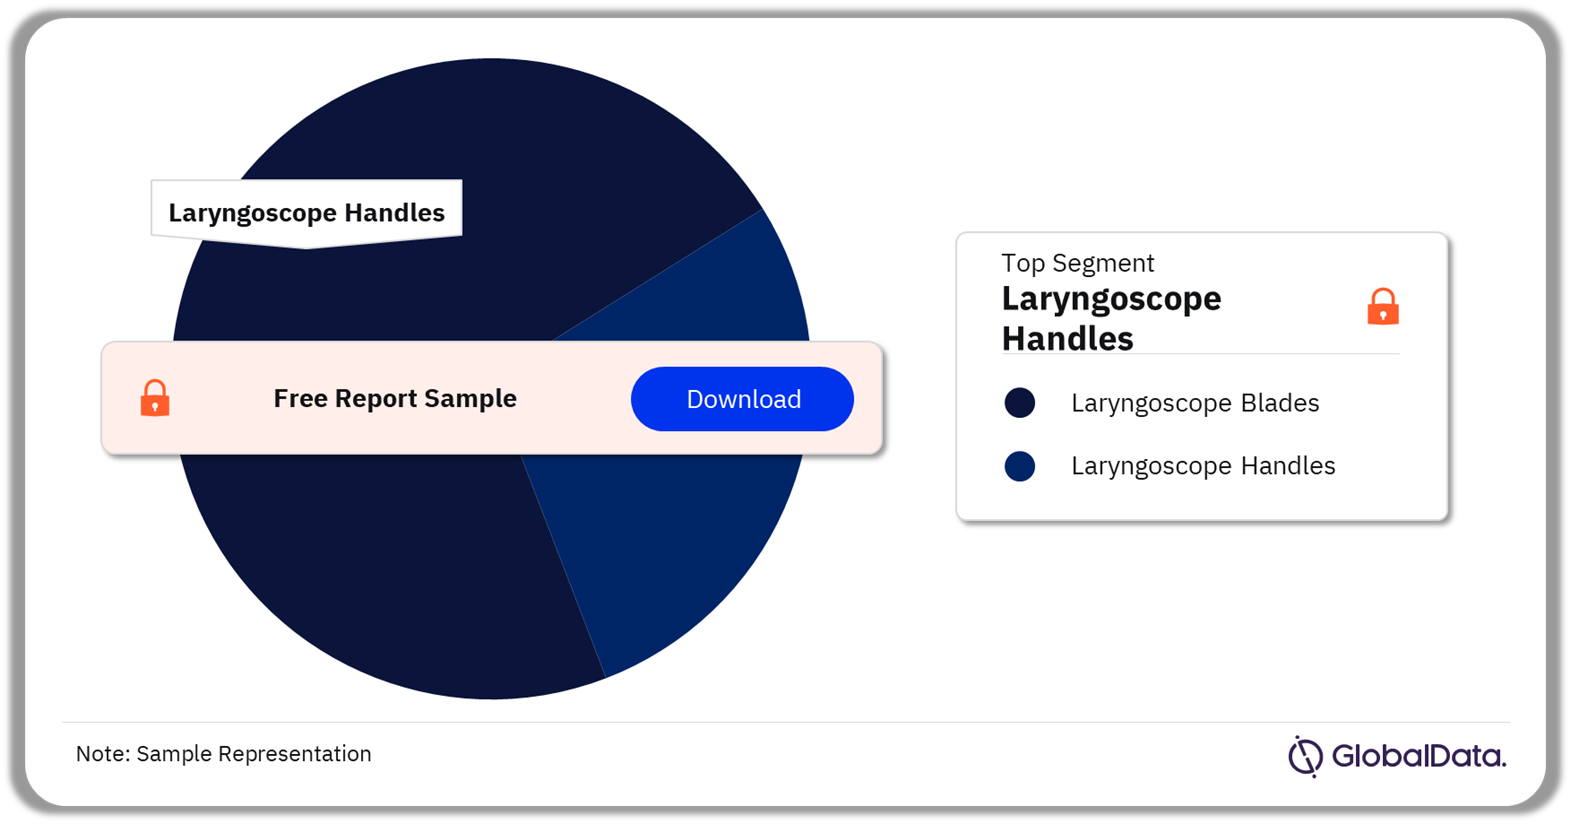 Laryngoscope Blades and Handles Market Analysis by Segments, 2023 (%)